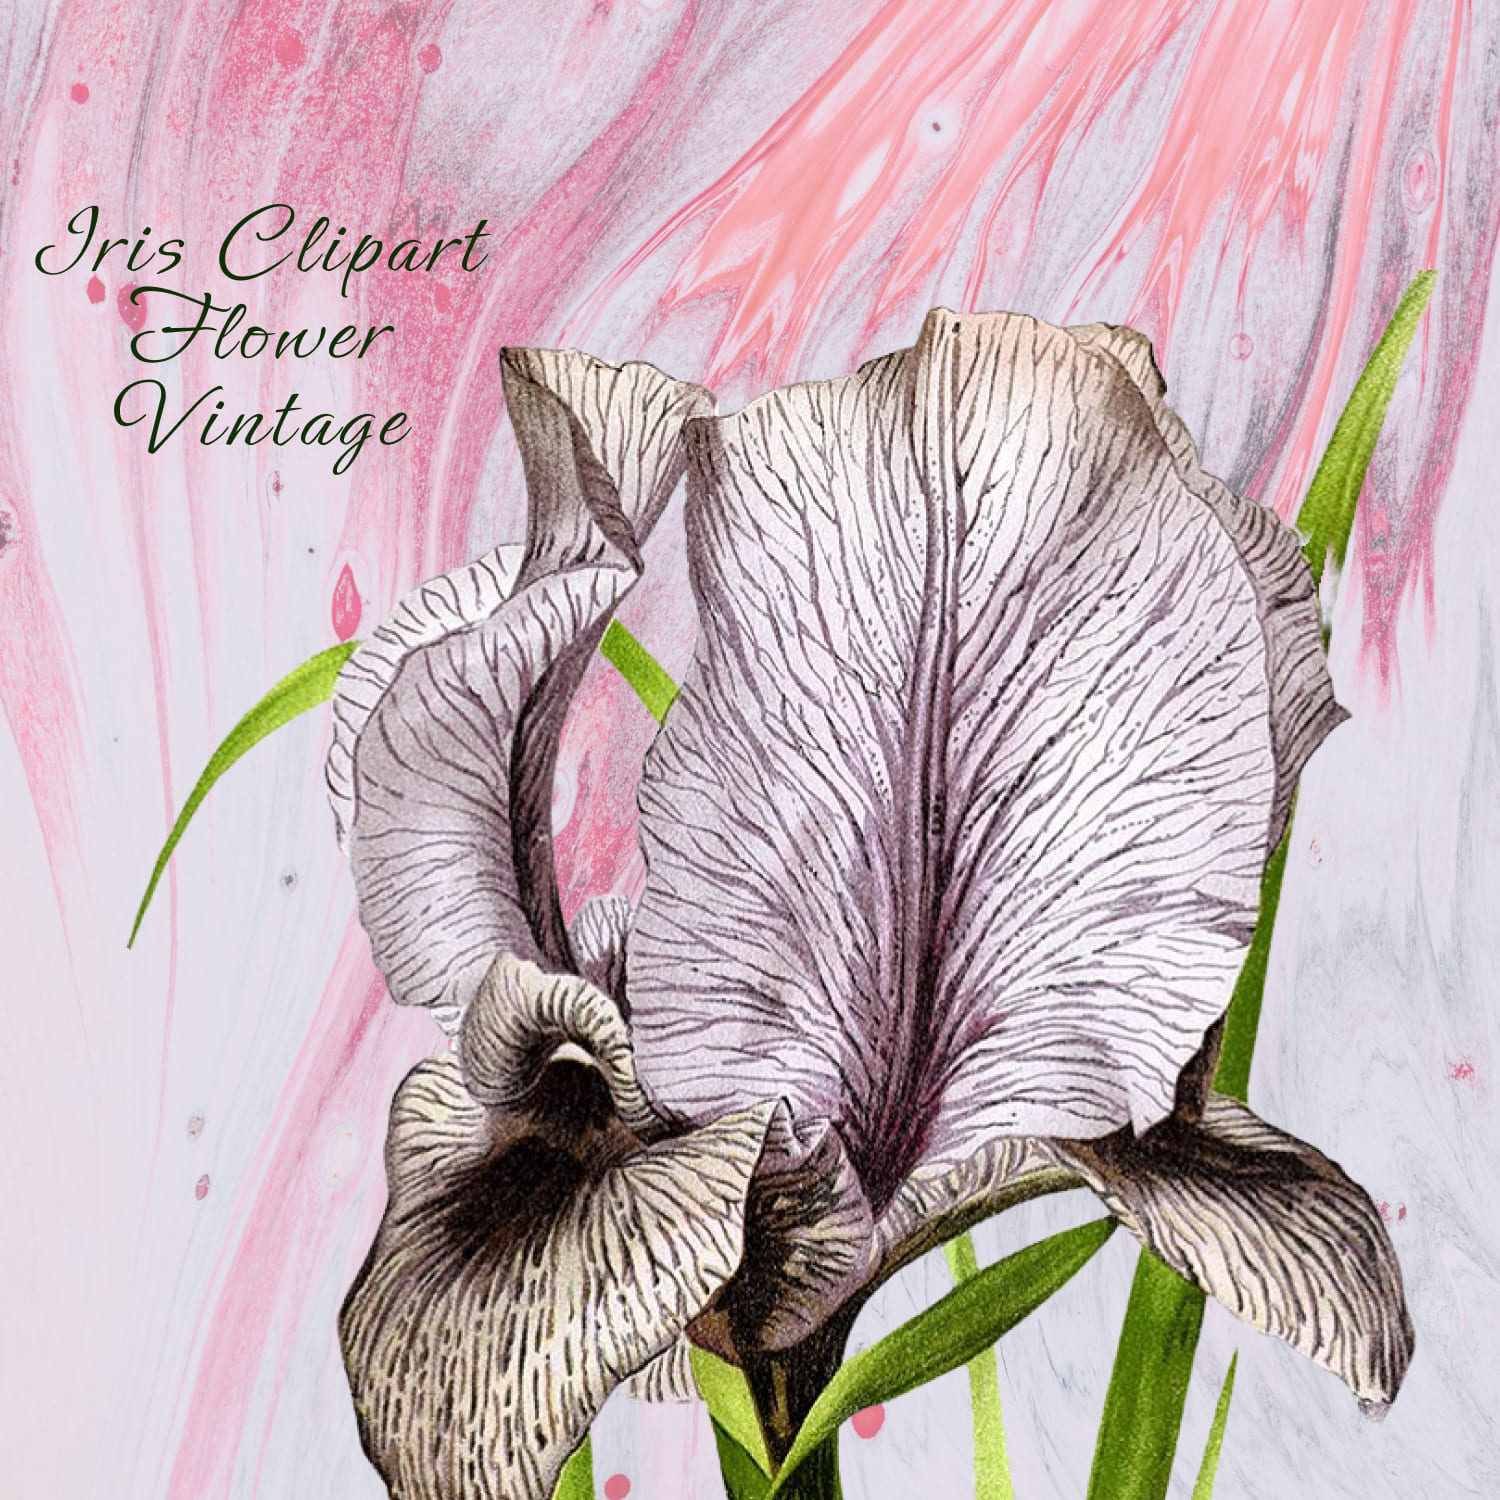 Iris Clipart Flower Oncocyclus Vintage cover image.